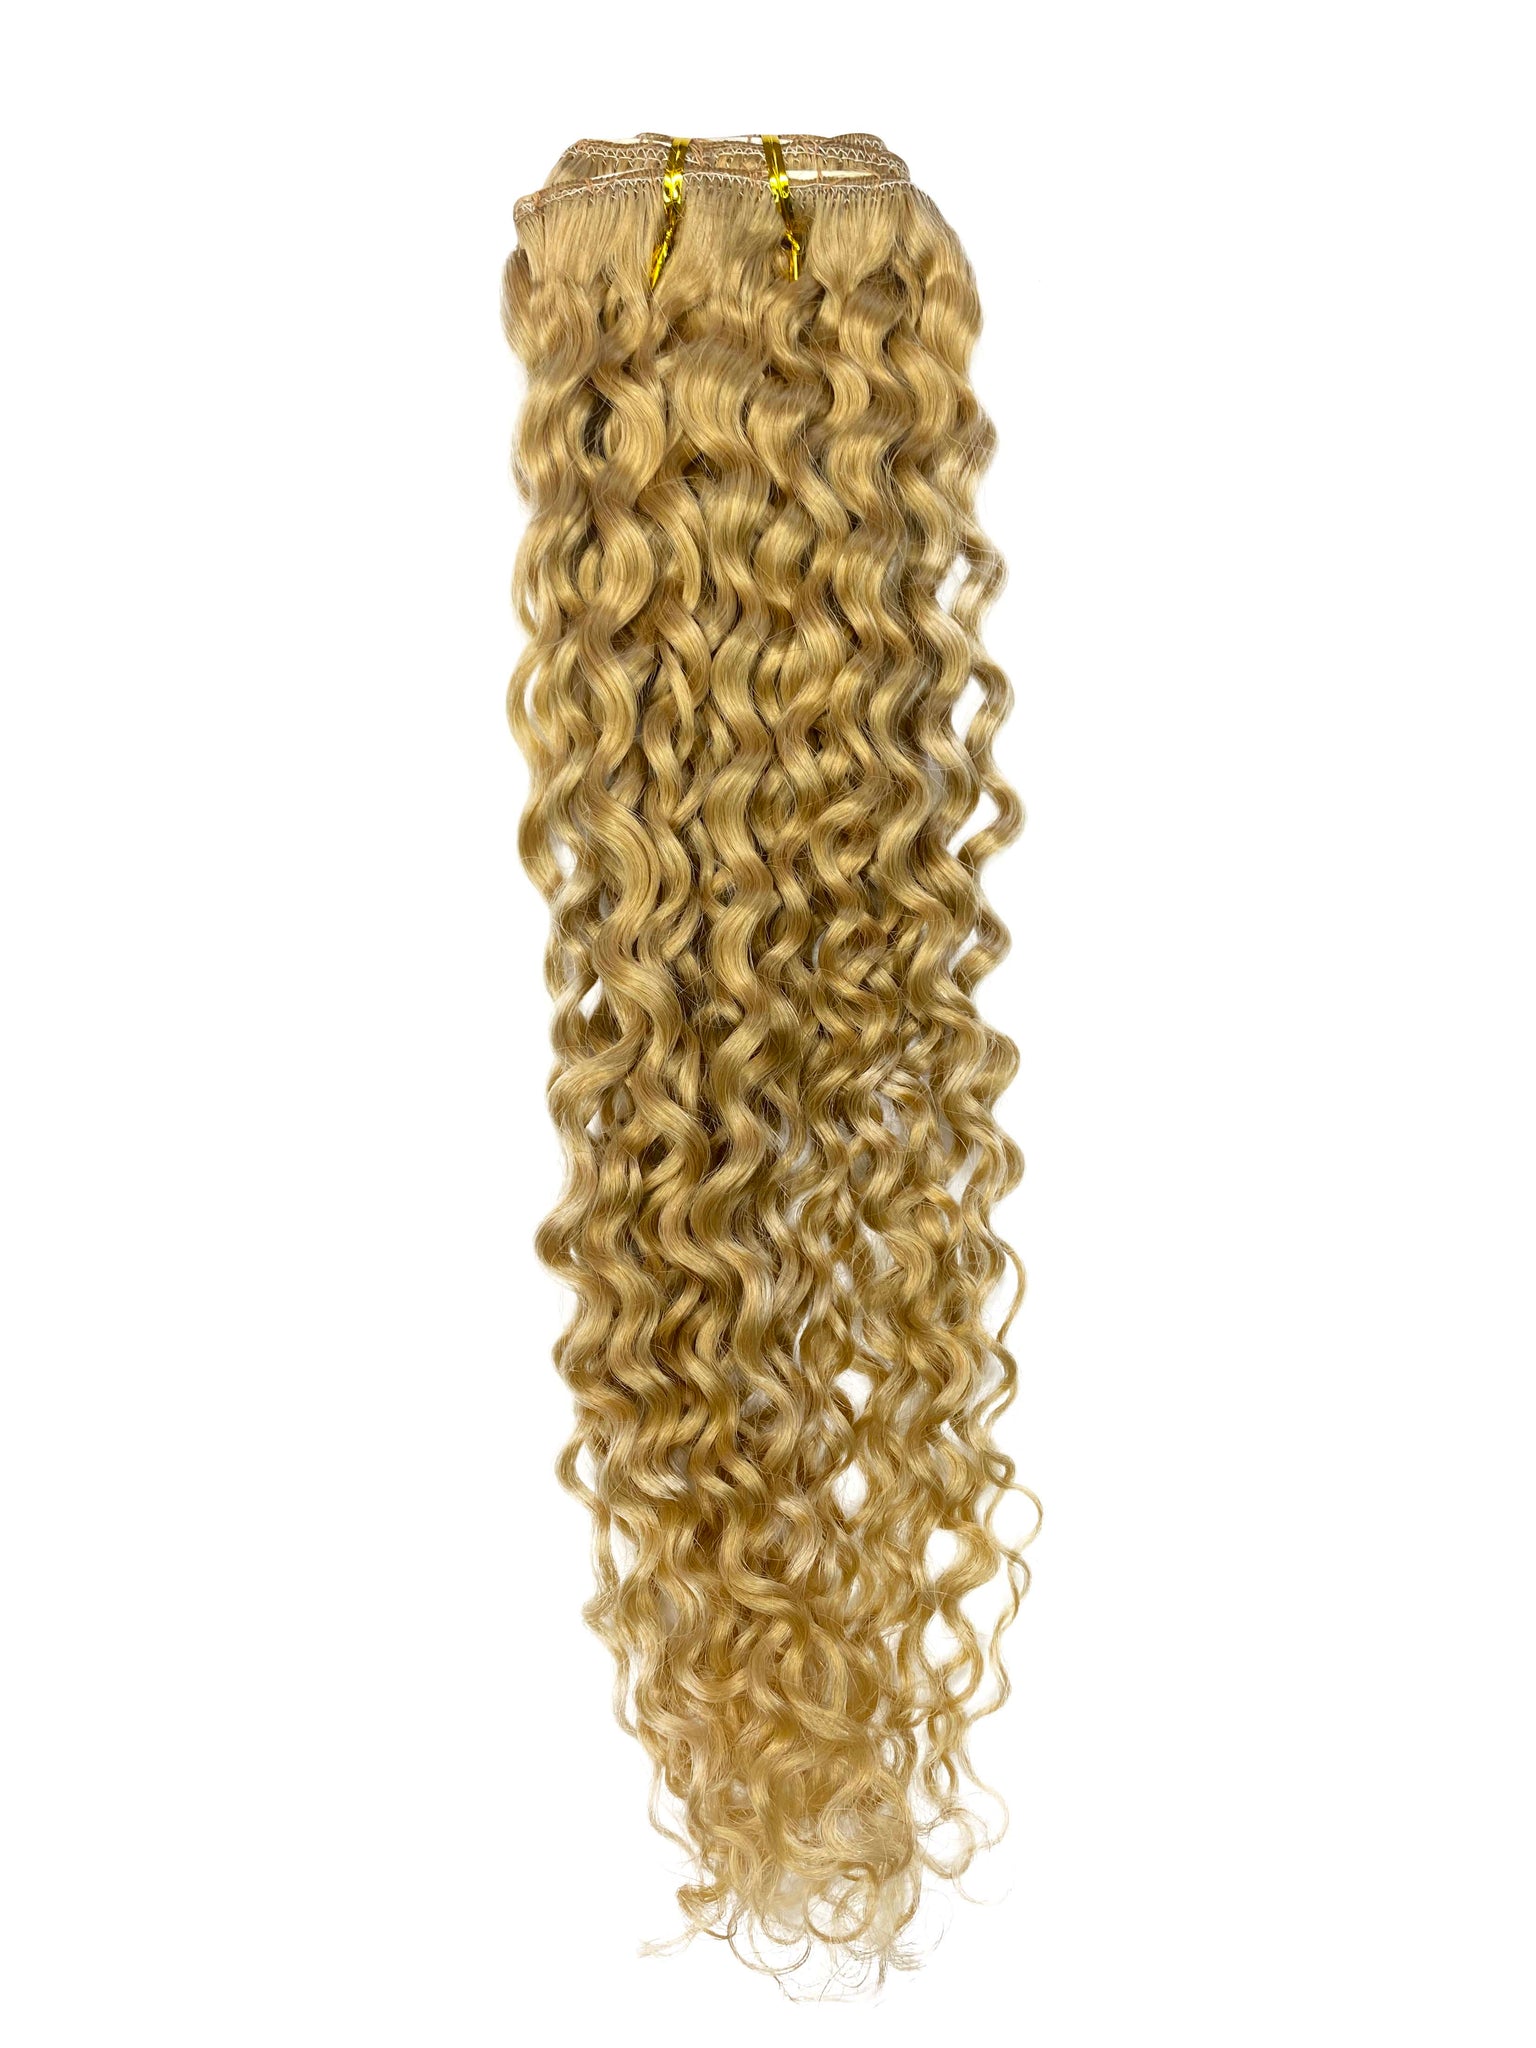 Kinky Curls Clip Ins |Natural Hair Extensions 100% Human Hair 3c-4a UK ...